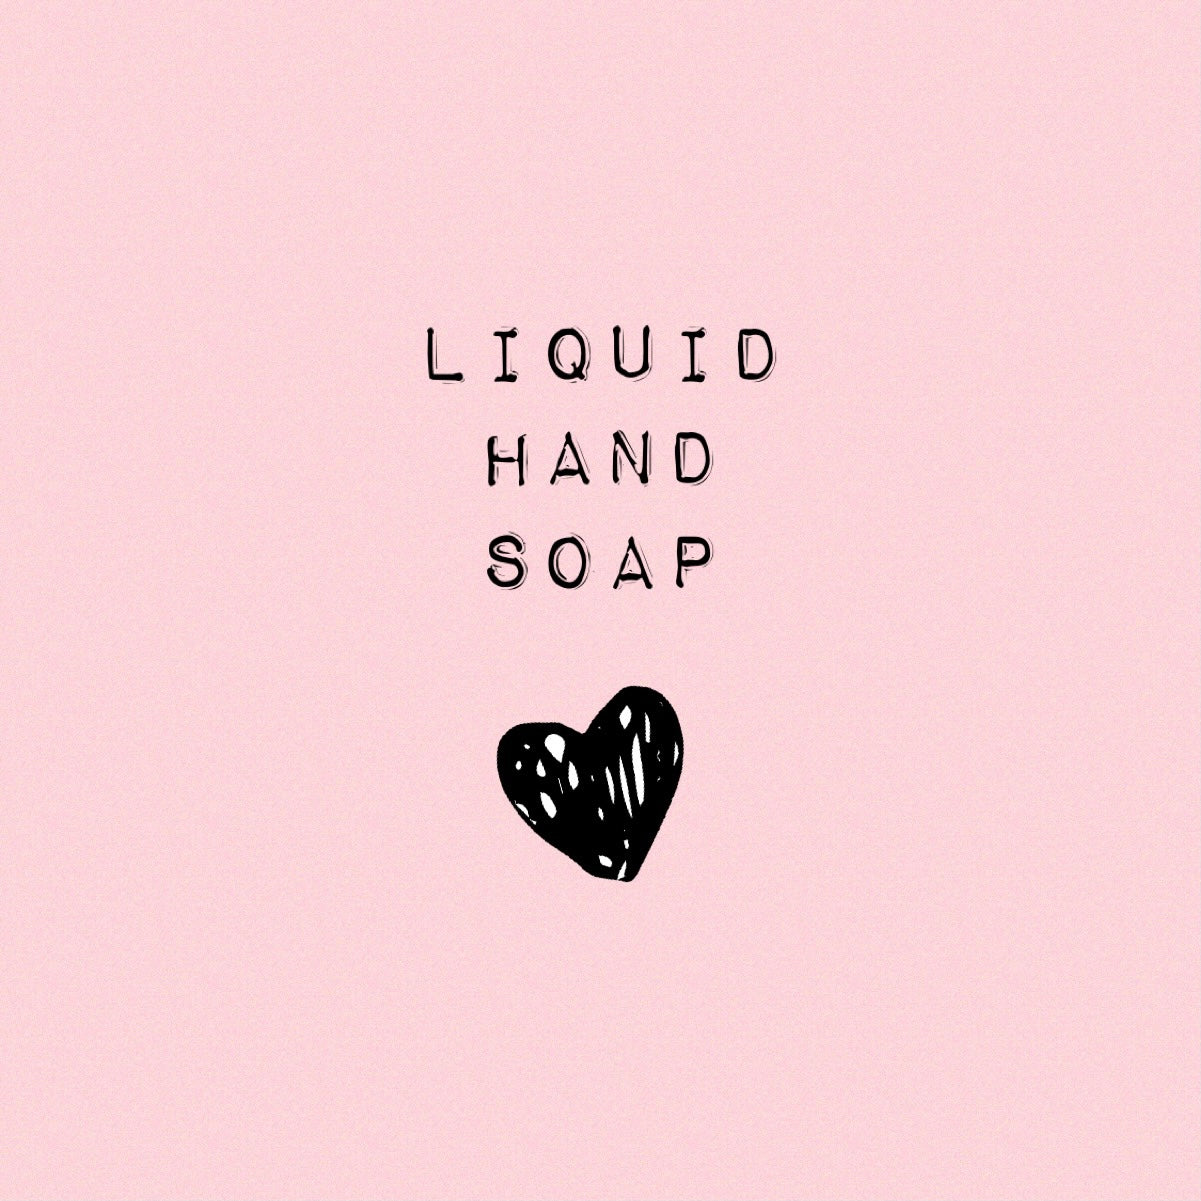 LIQUID HAND SOAP